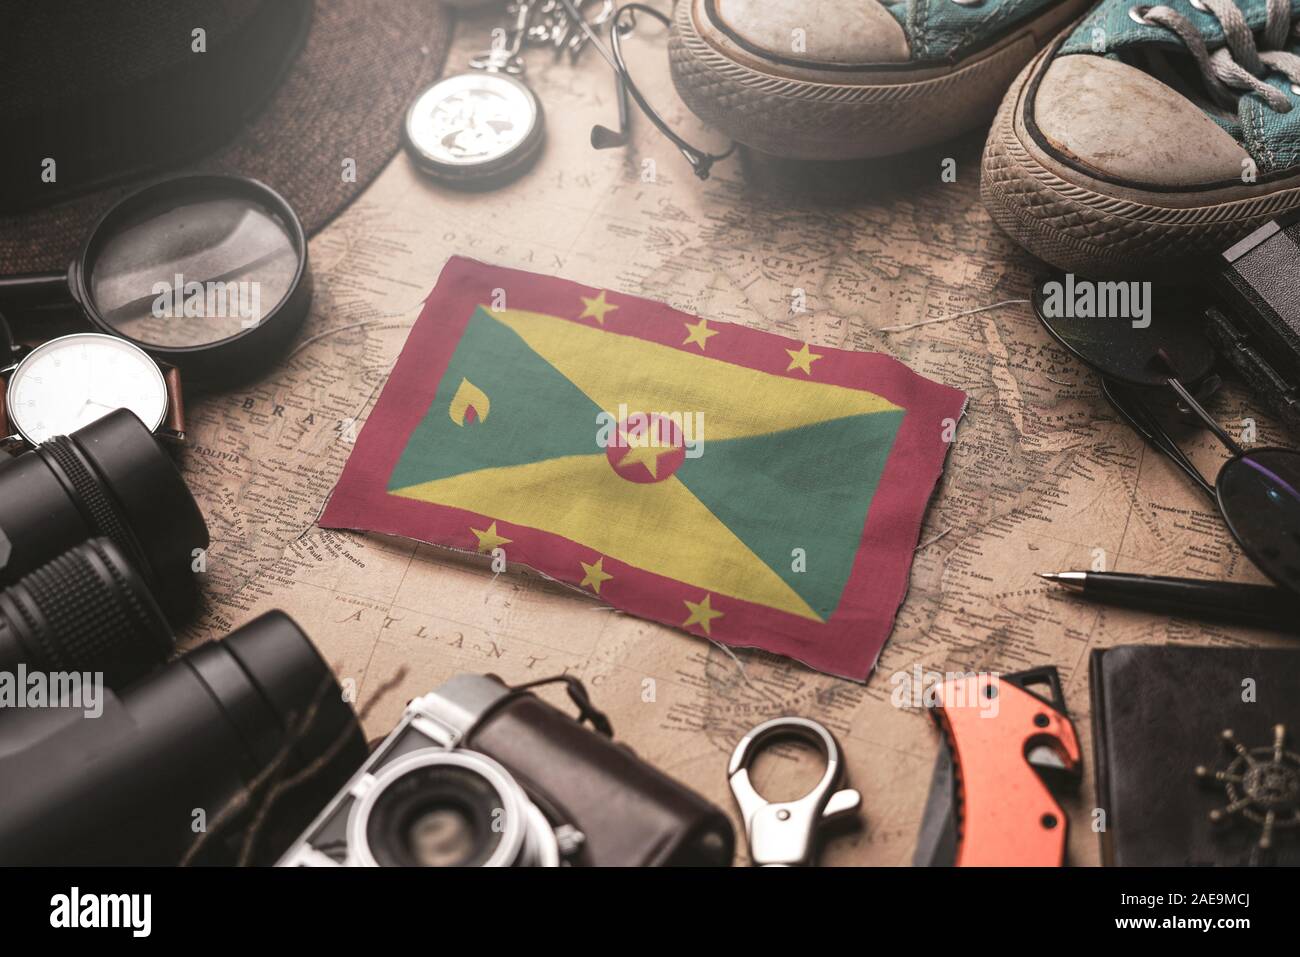 Grenada Flag Between Traveler's Accessories on Old Vintage Map. Tourist Destination Concept. Stock Photo